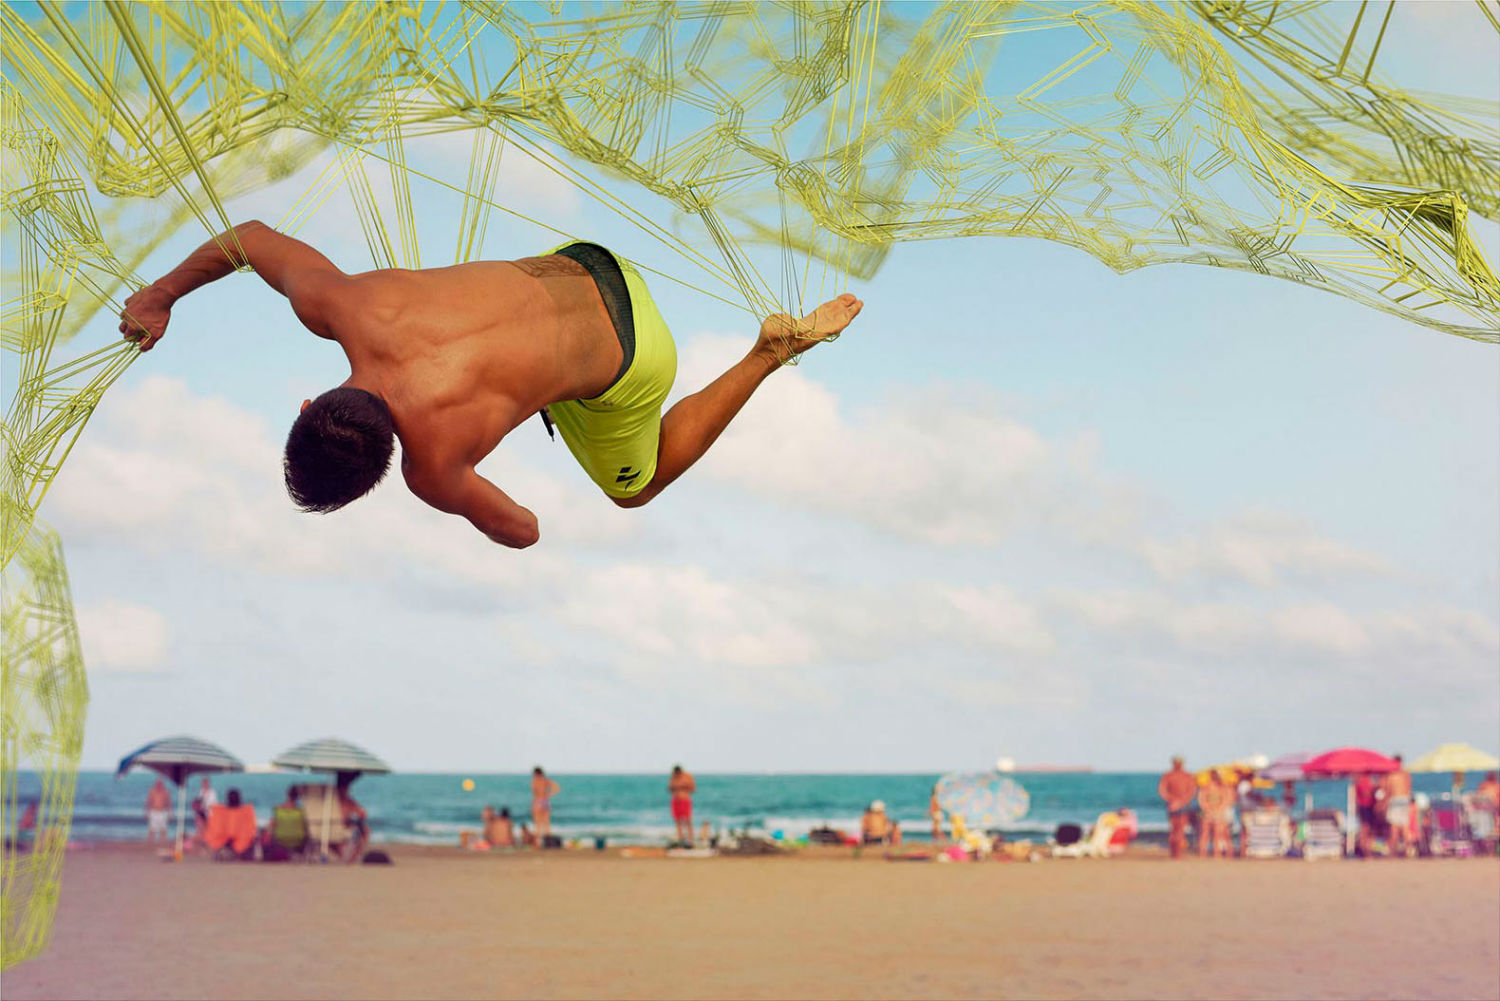 dimitri daniloff meshalogy photography colour beach acrobatics 